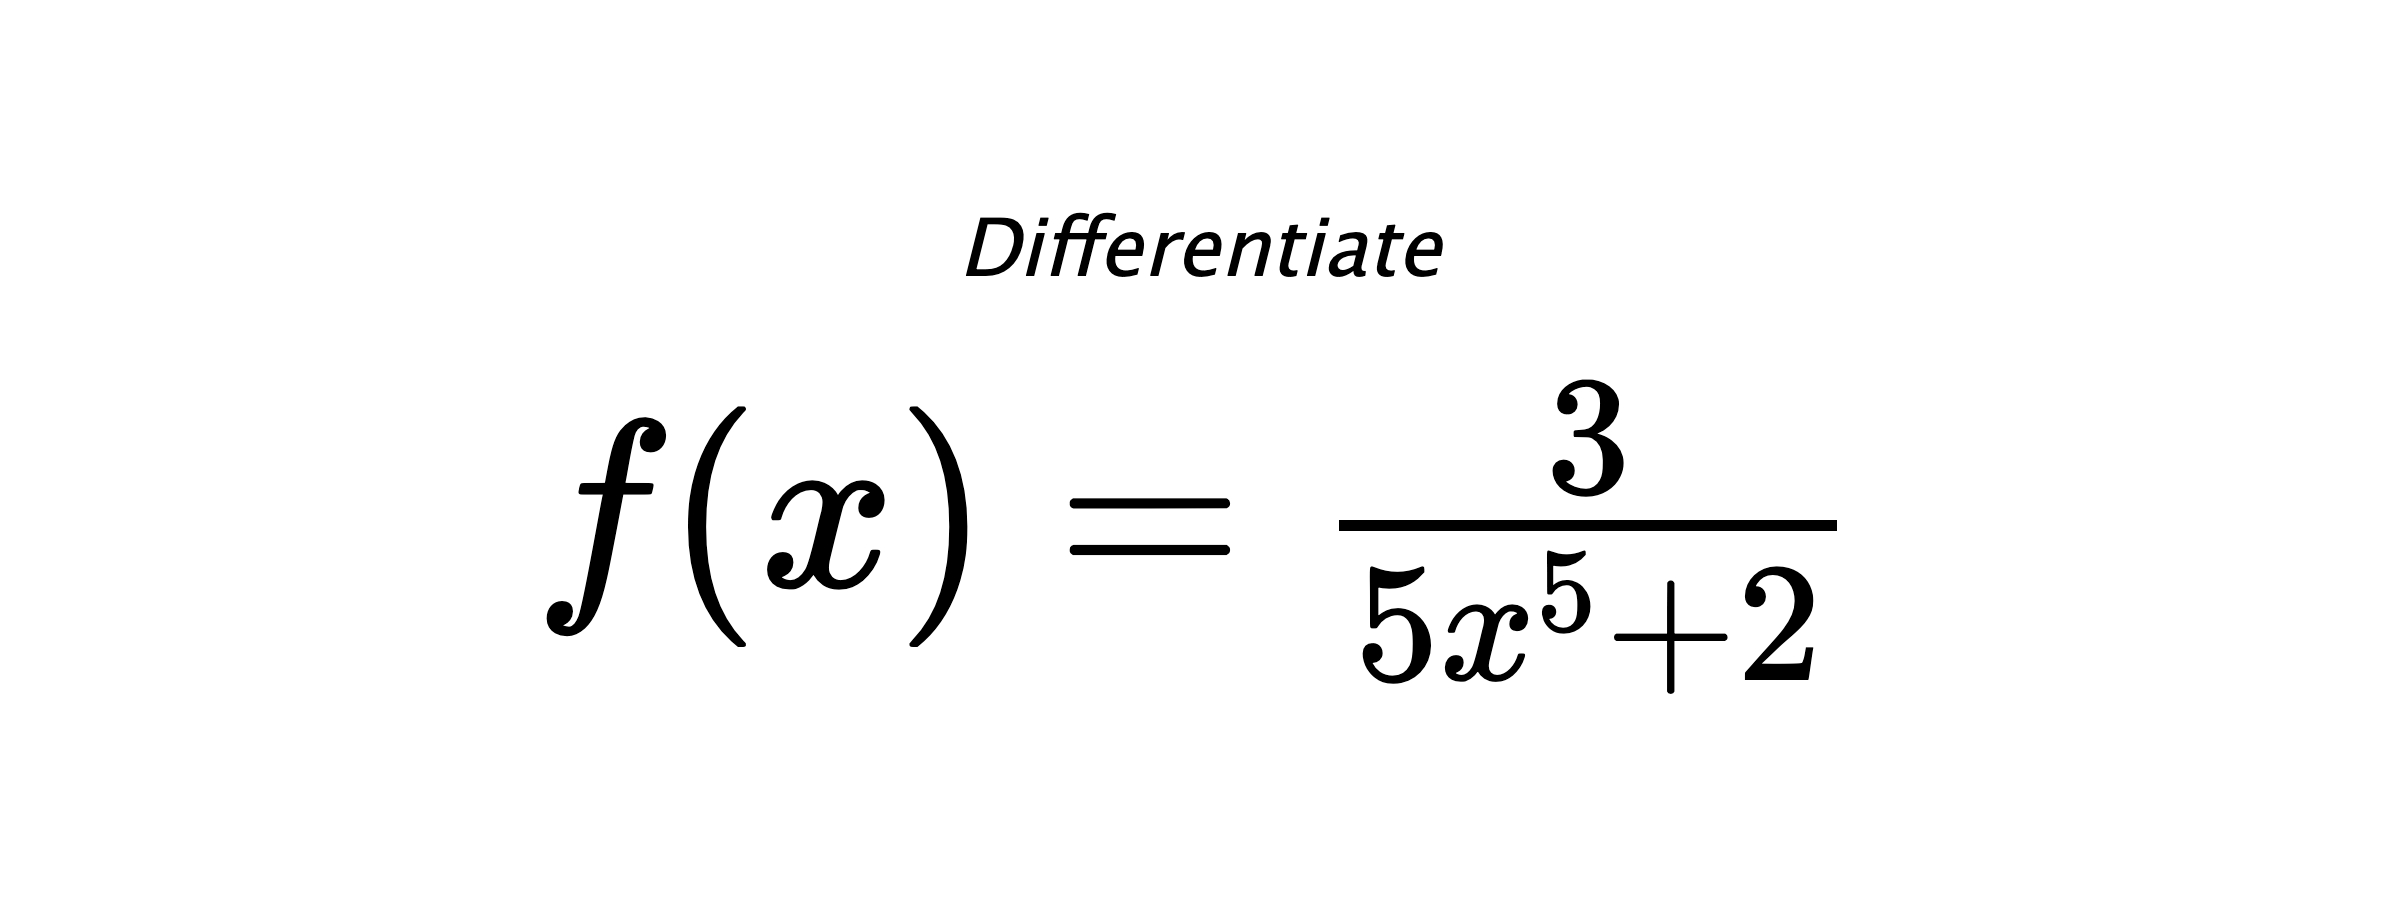 Differentiate $ f(x) = \frac{3}{5 x^{5} + 2} $